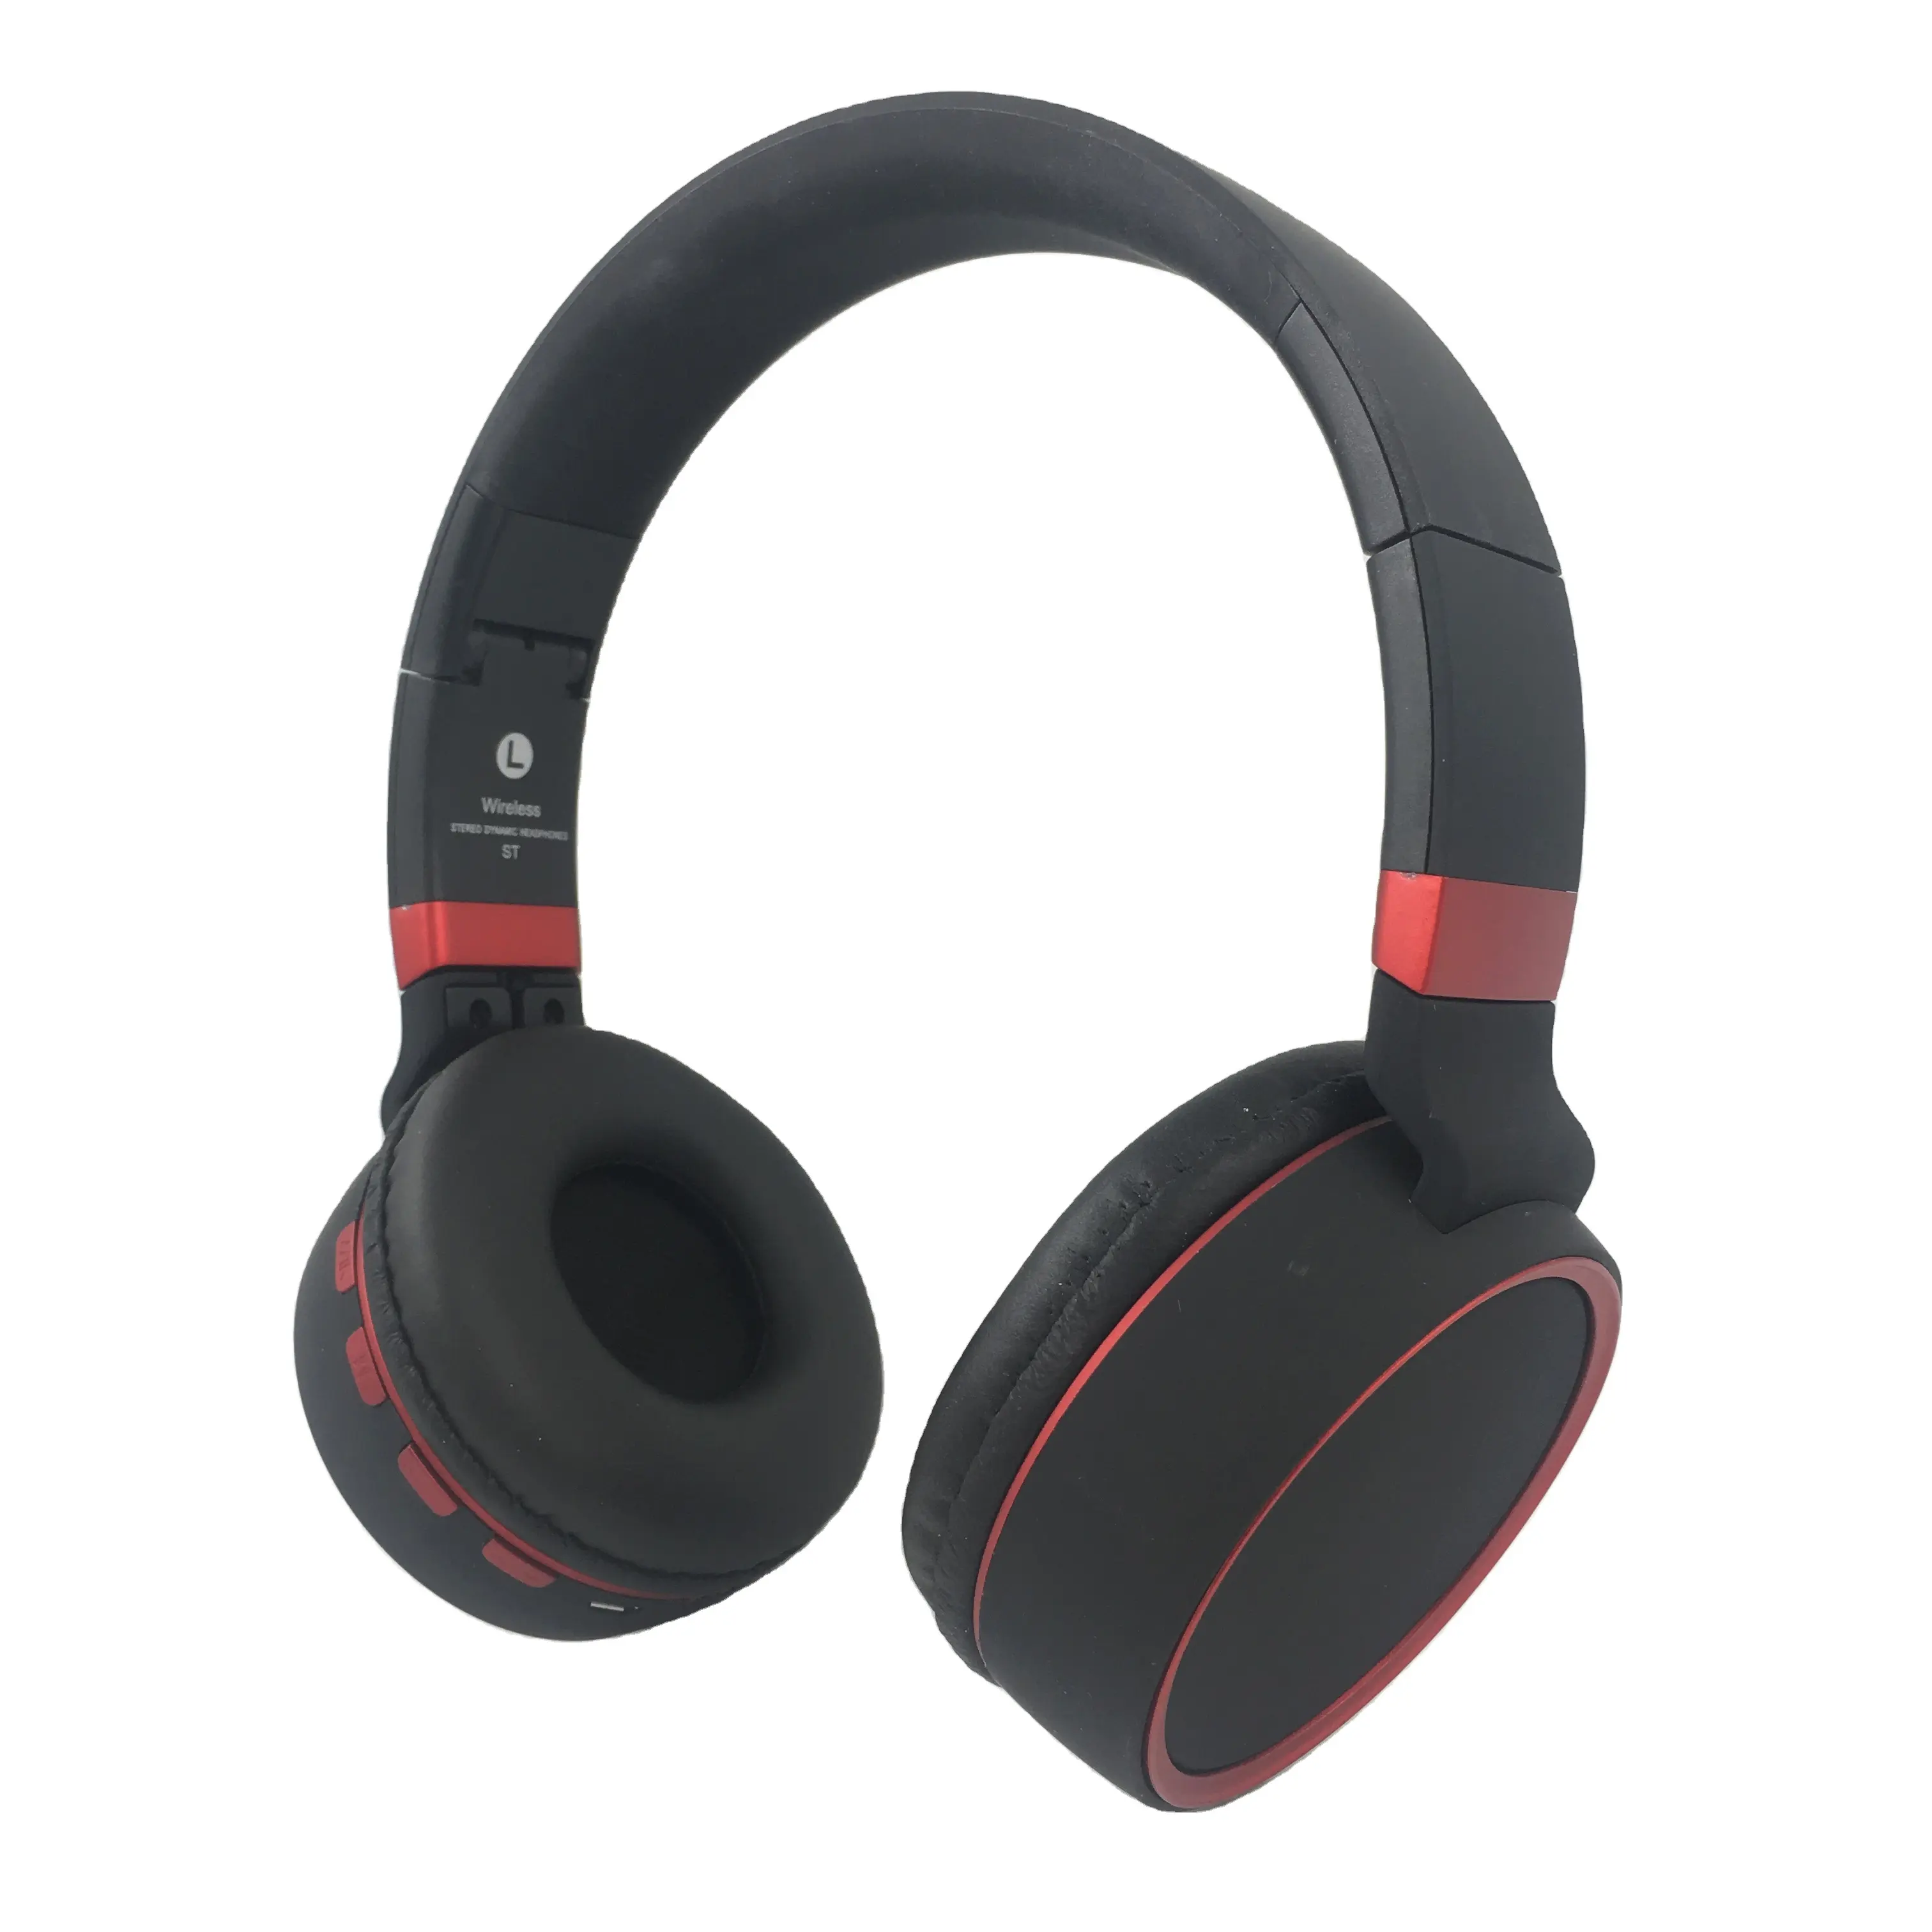 St10 y novo headset amazon top seller 2021 fábrica sem fio fone de ouvido oem fornecedores verificados